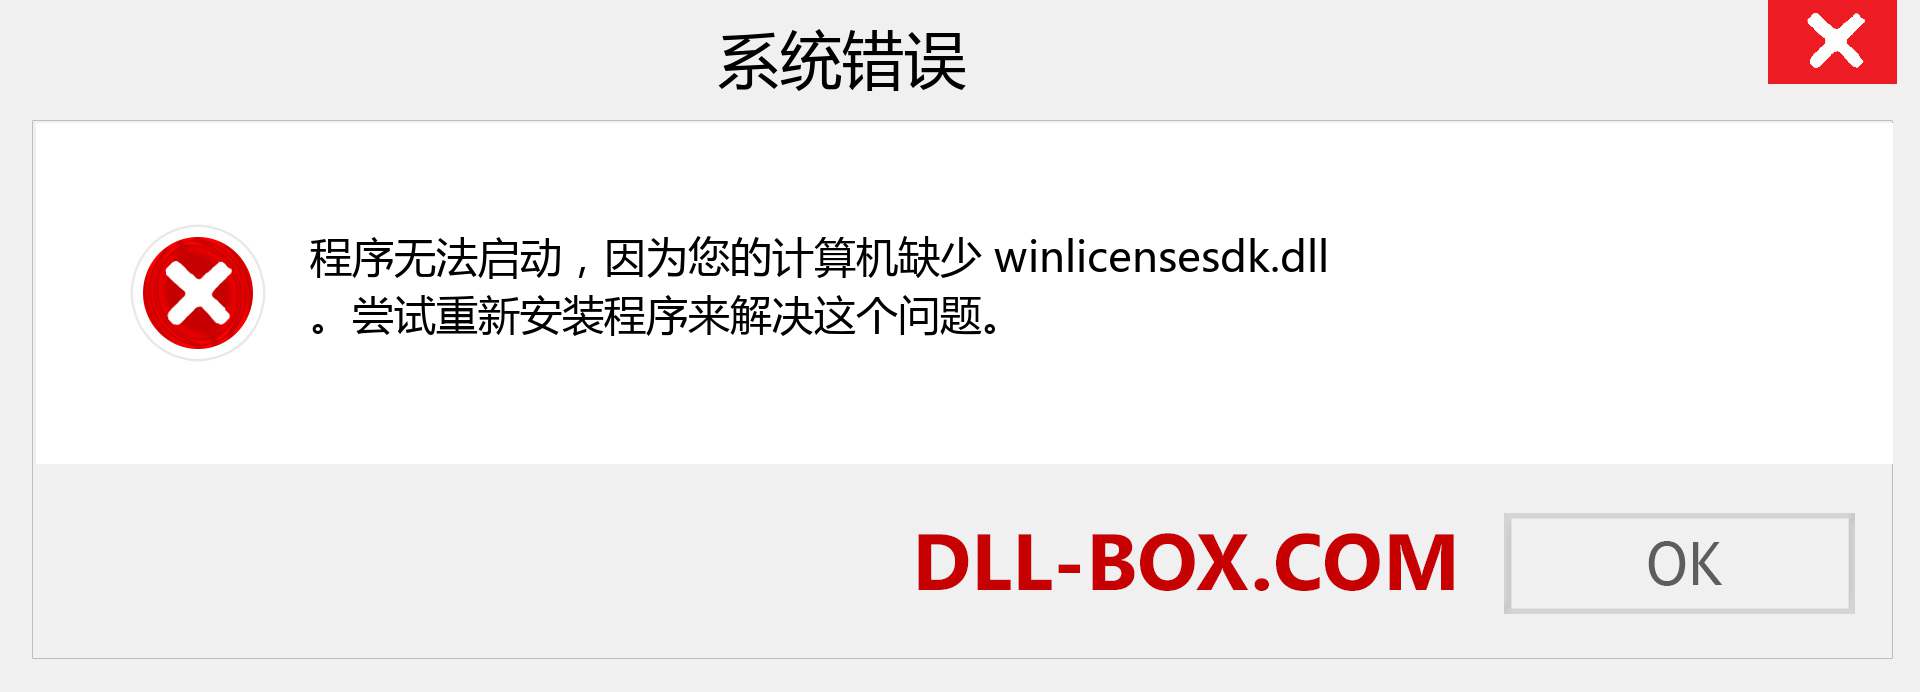 winlicensesdk.dll 文件丢失？。 适用于 Windows 7、8、10 的下载 - 修复 Windows、照片、图像上的 winlicensesdk dll 丢失错误